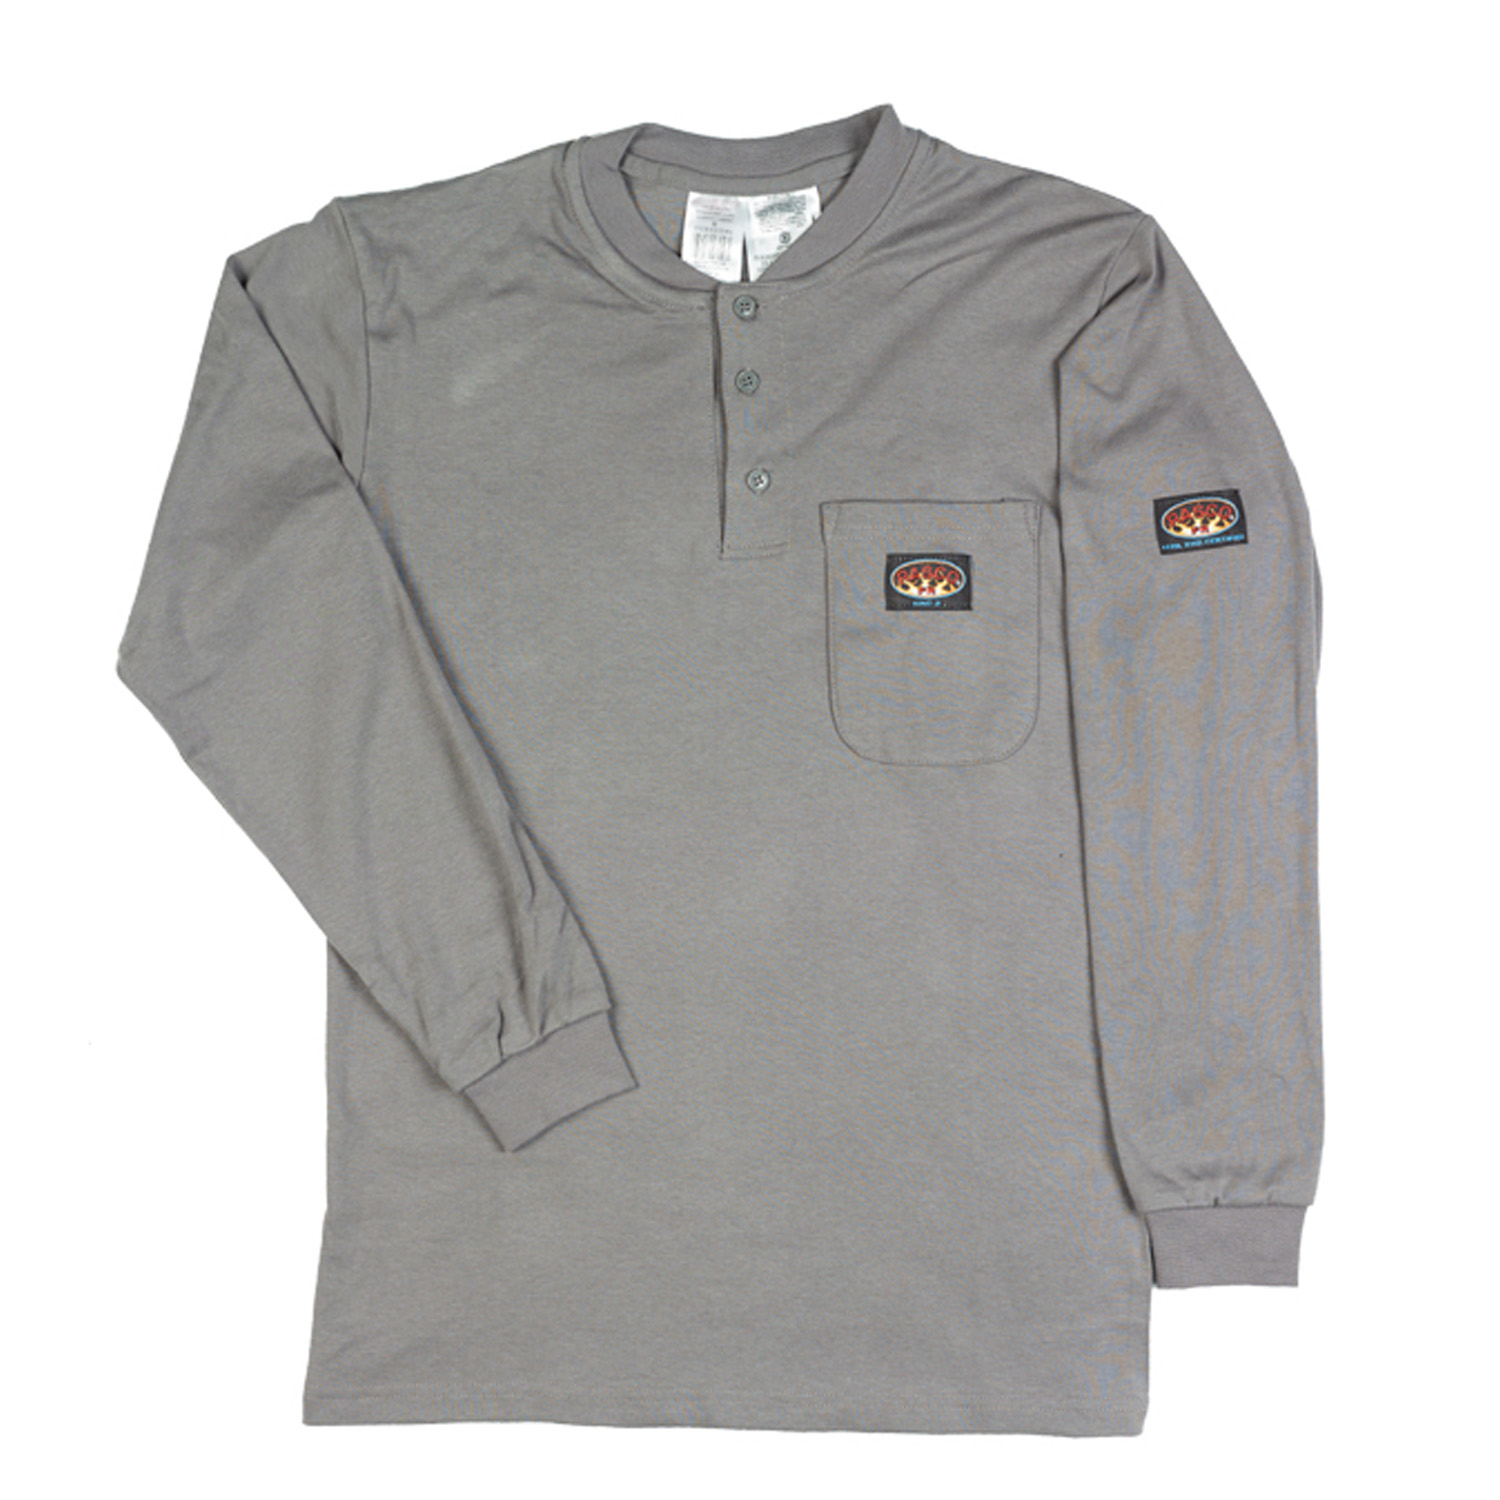 Rasco Flame Resistant Henley T-Shirt - Gray